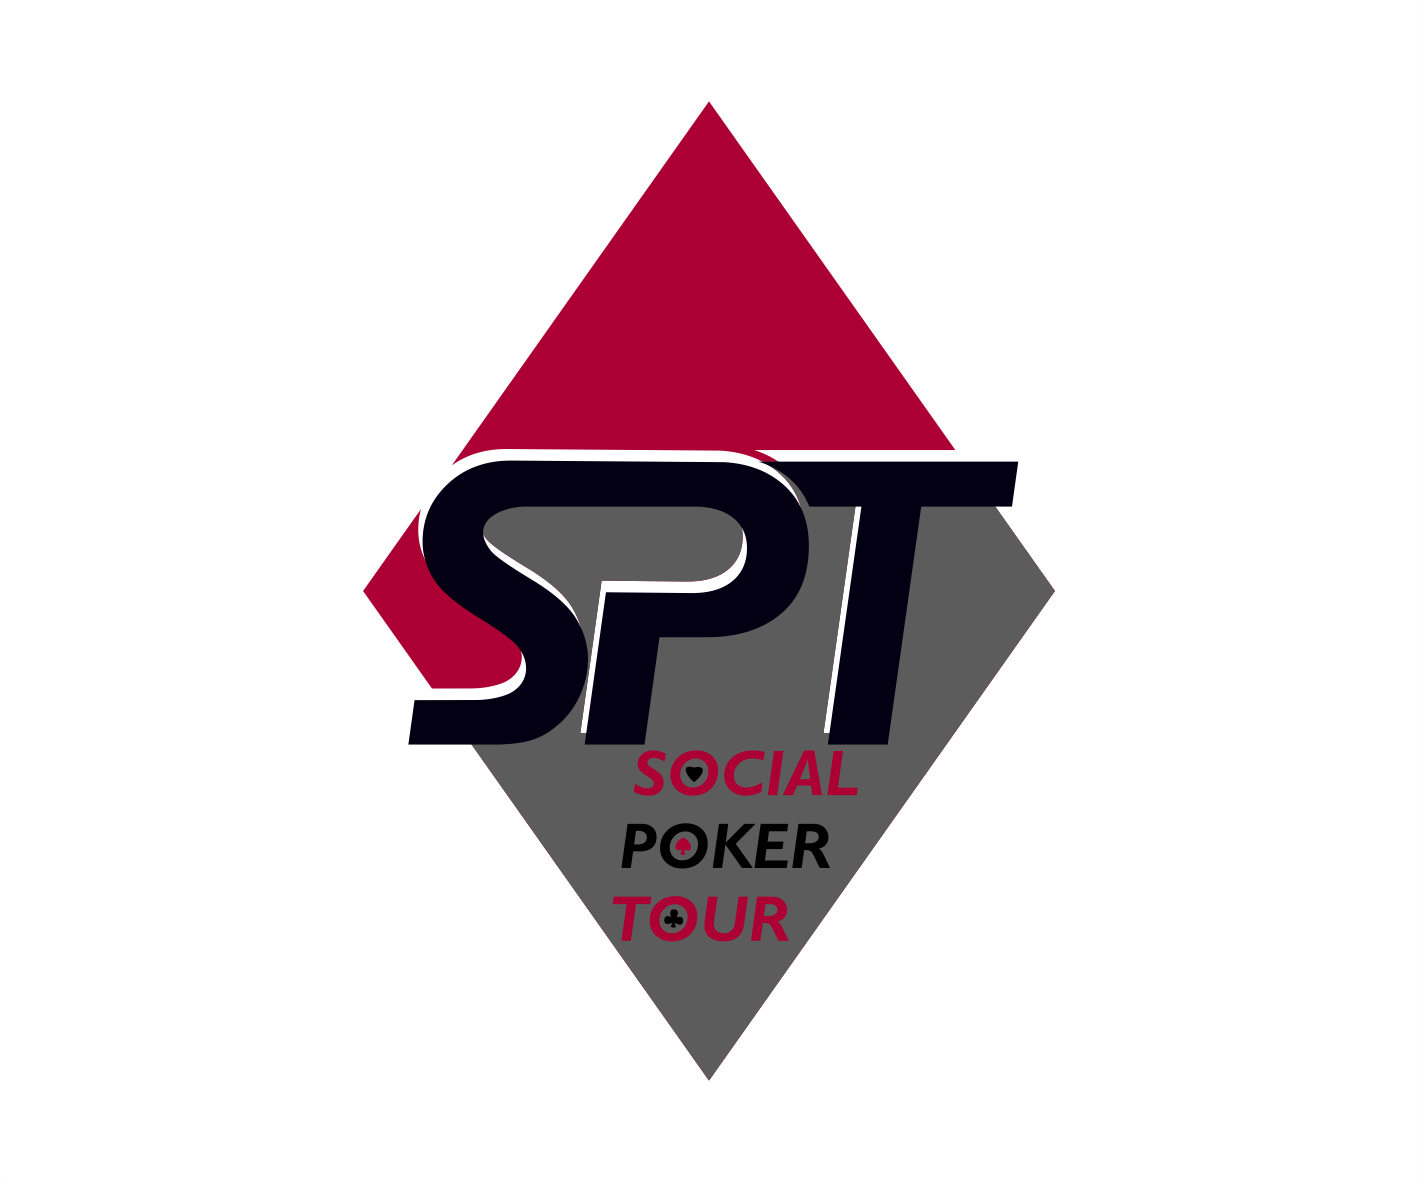 SPT Logo - Masculine, Bold Logo Design for Social Poker Tour, or SPT or both